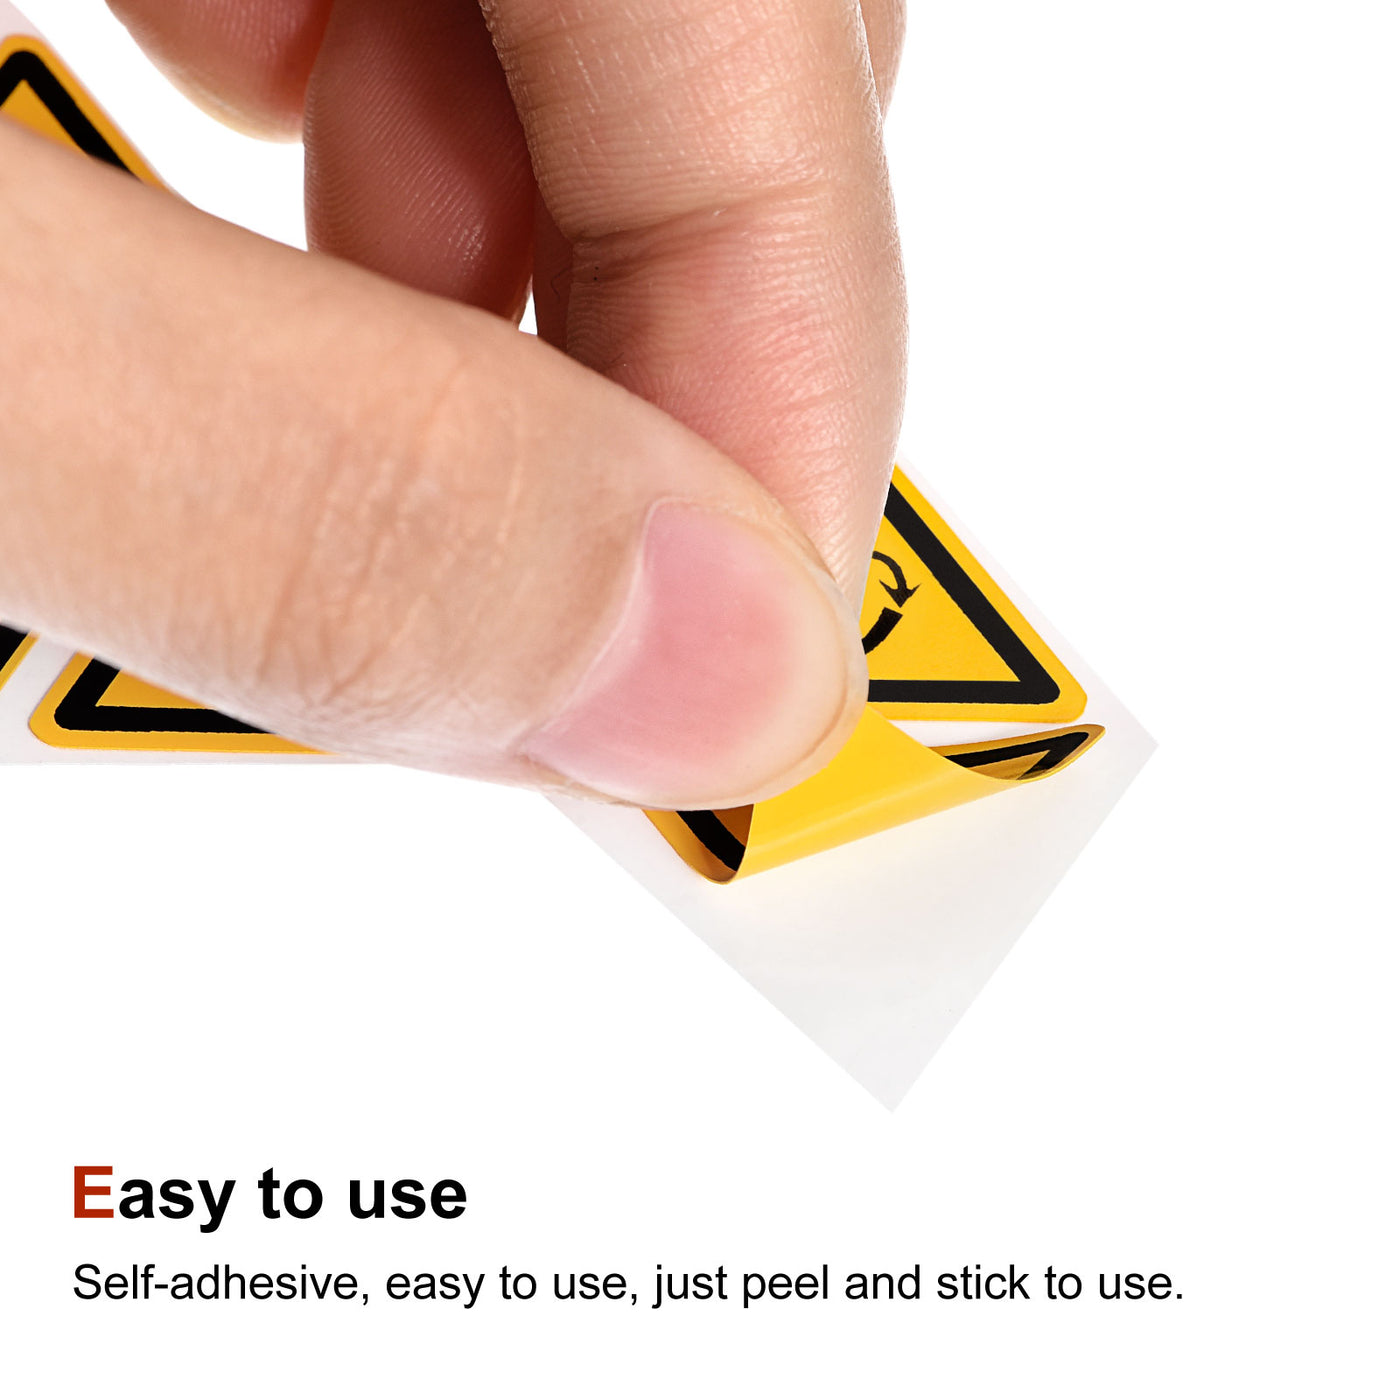 Harfington Triangle Beware of Rotating Bodies Warning Sign Self Adhesive 20mm 20Pcs